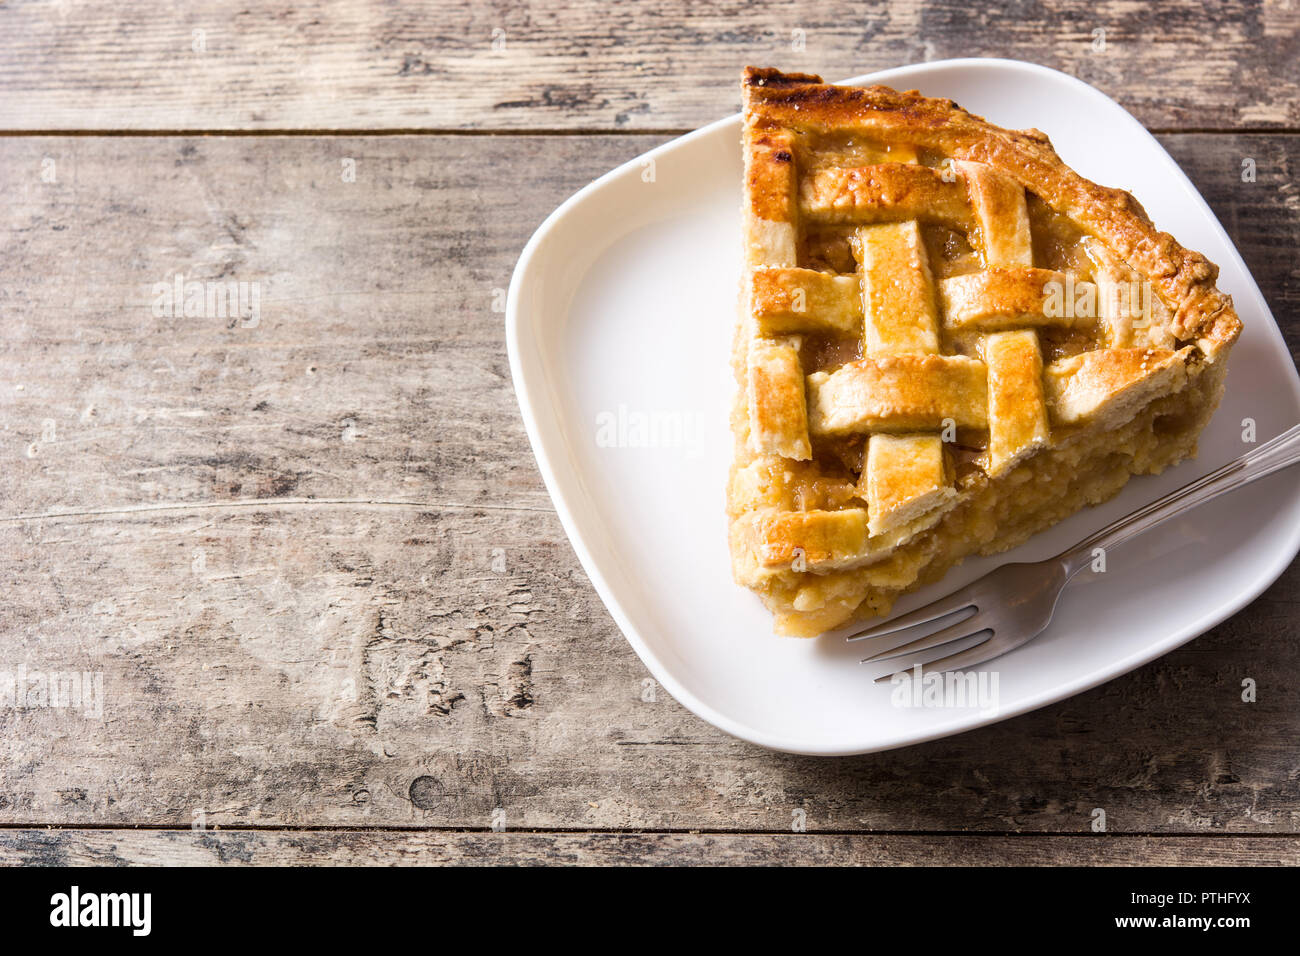 Homemade apple pie slice on wooden table. Copyspace Stock Photo